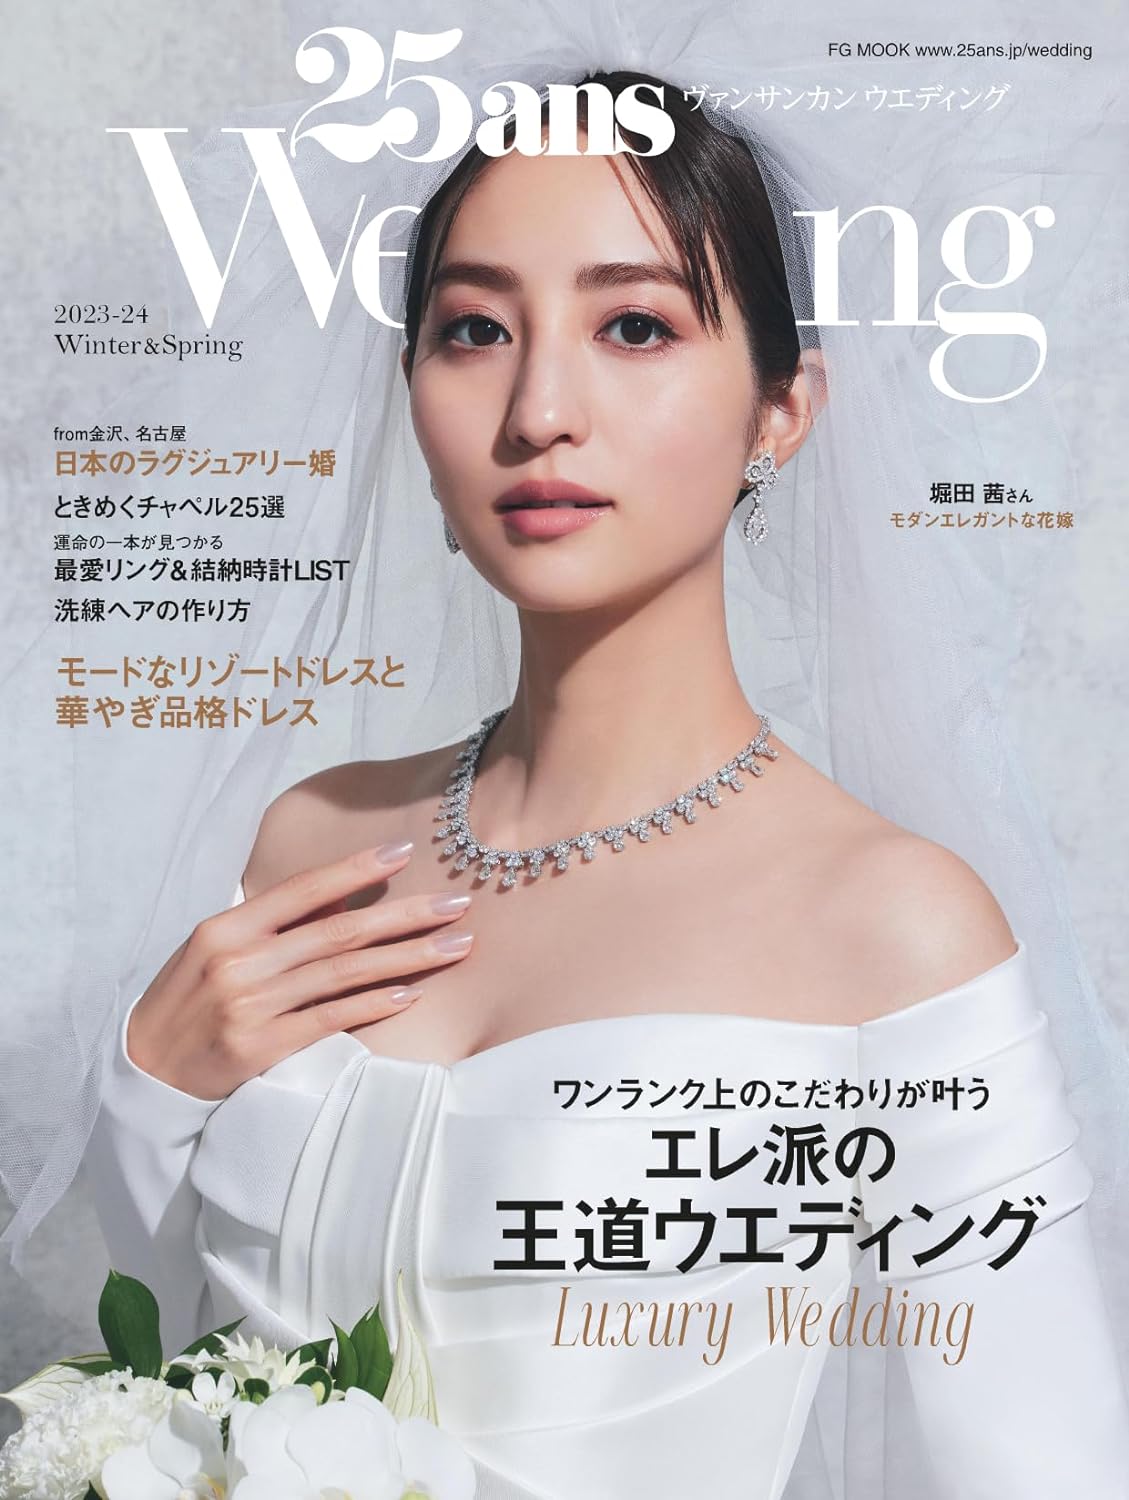 25ans Wedding 2023-24 Winter & Spring(12月27日発売)「夢見るブライダルリング」